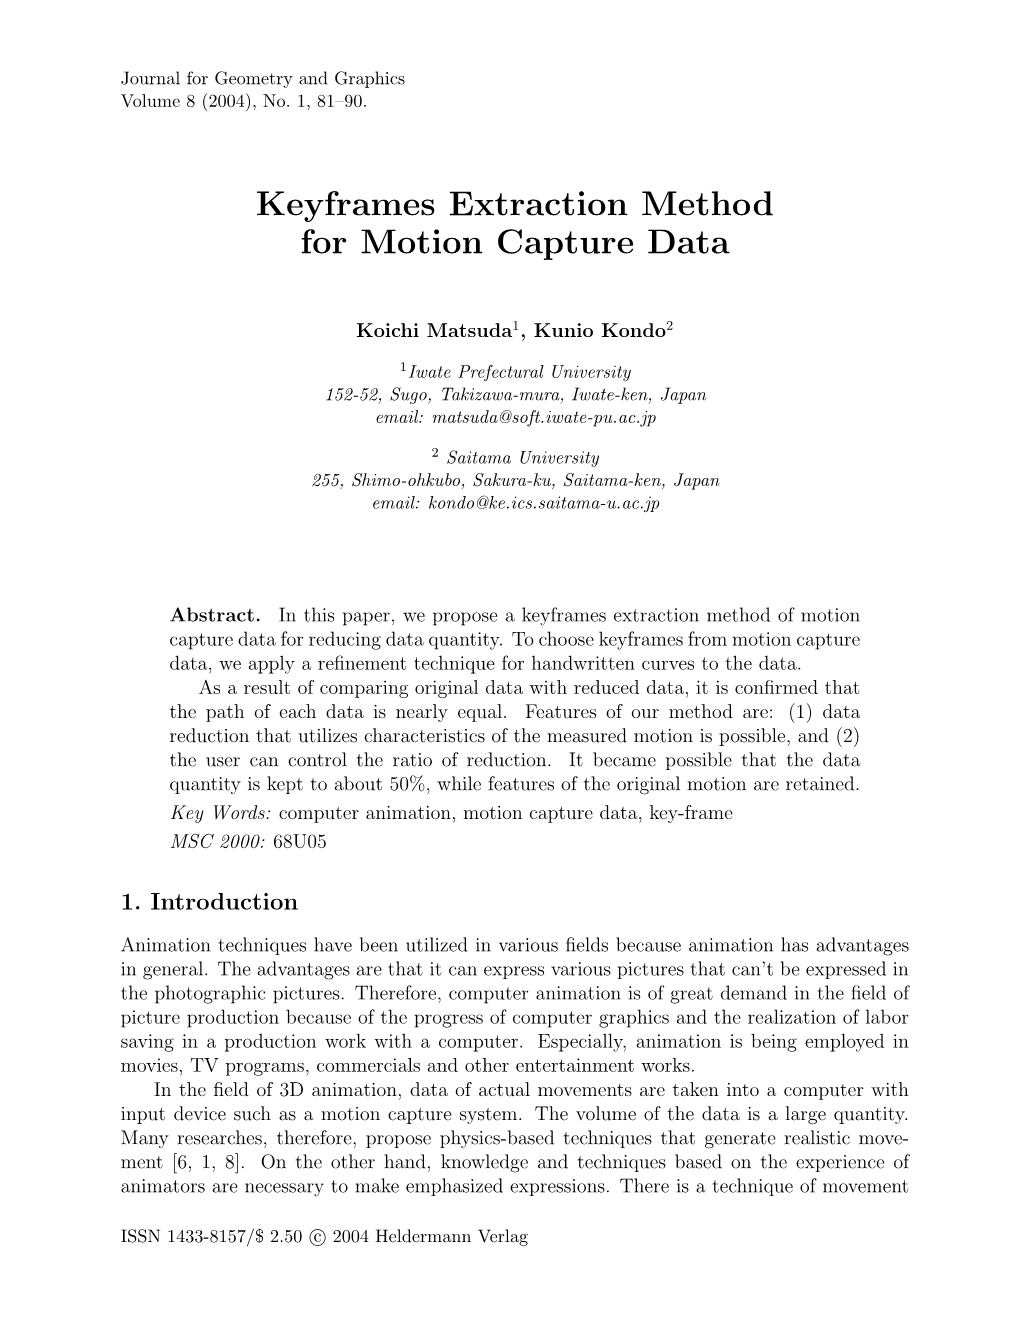 Keyframes Extraction Method for Motion Capture Data